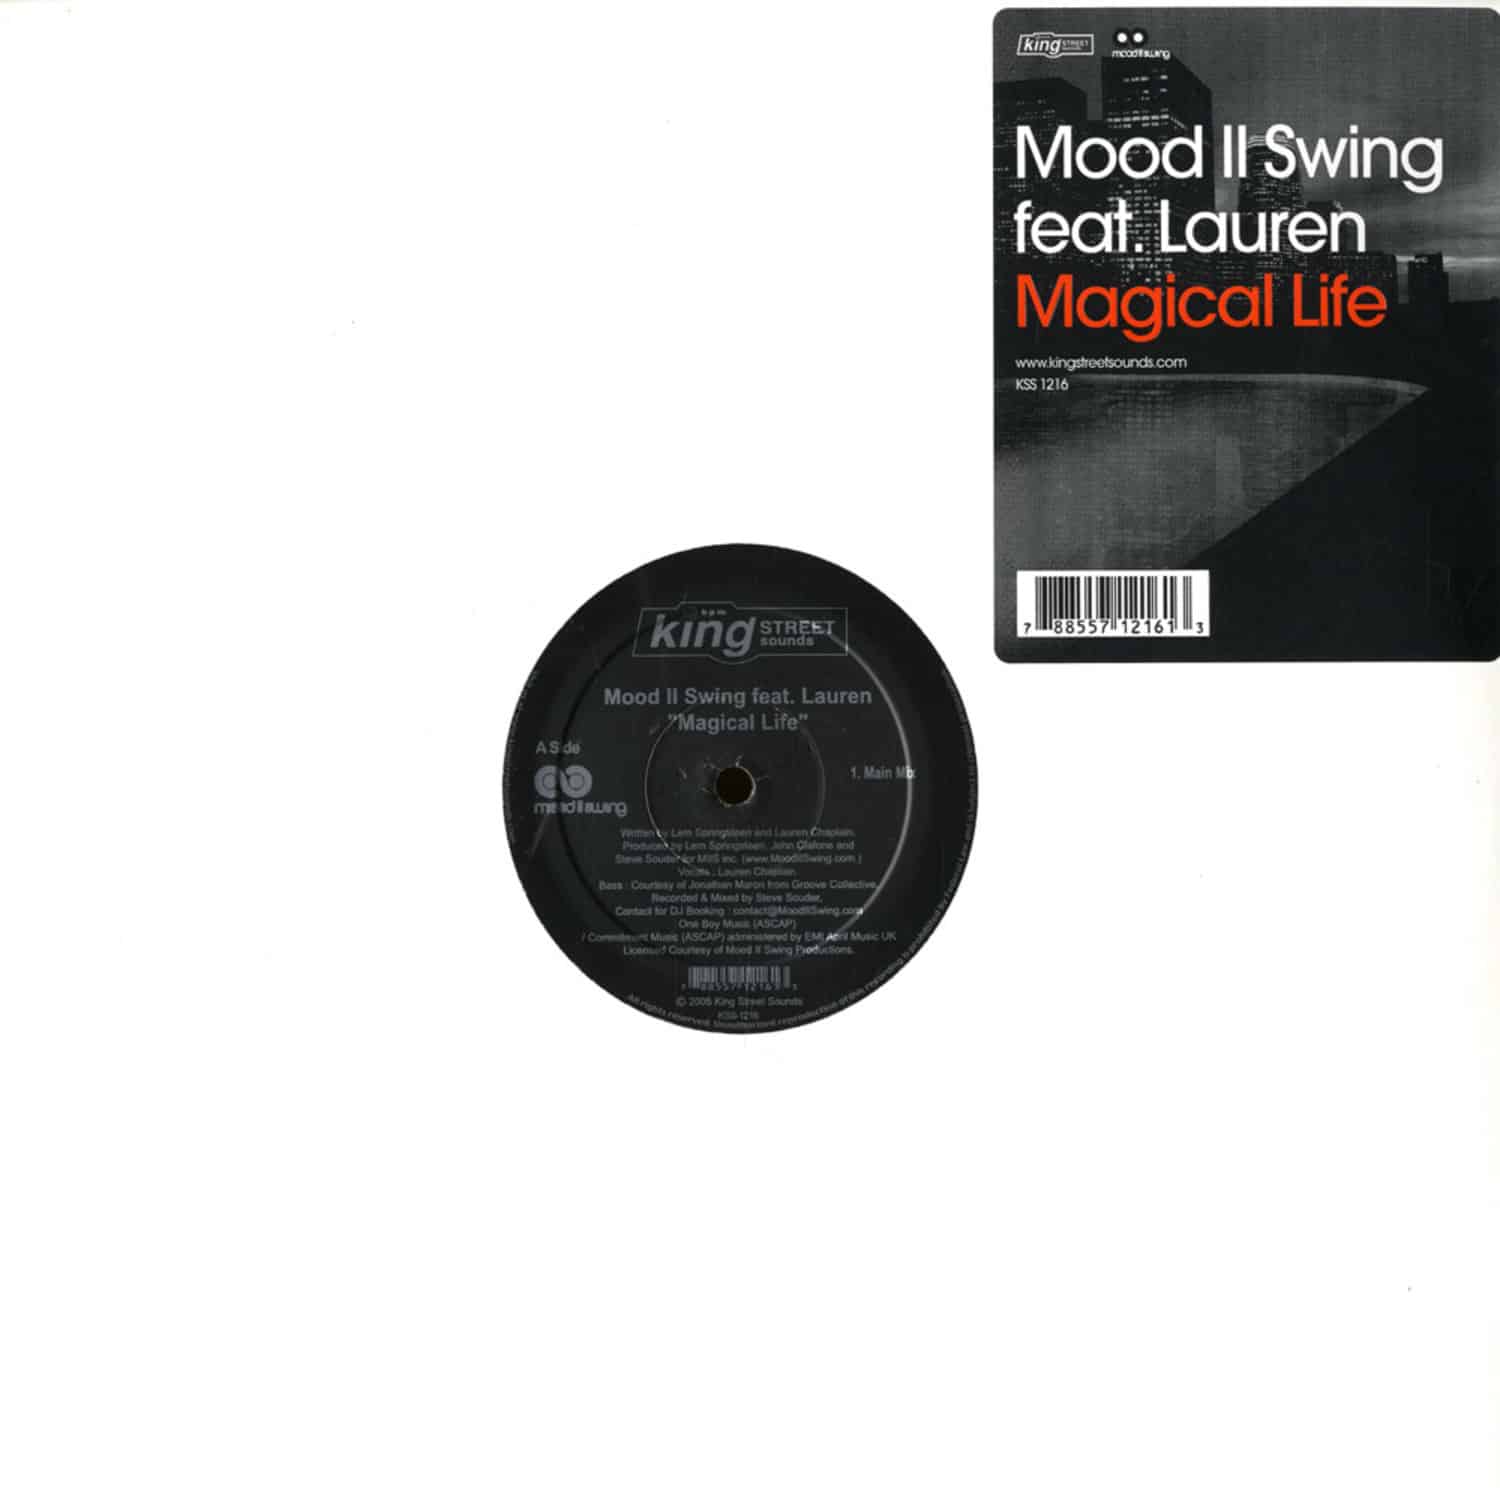 Mood Il Swing feat. Lauren - MAGICAL LIFE